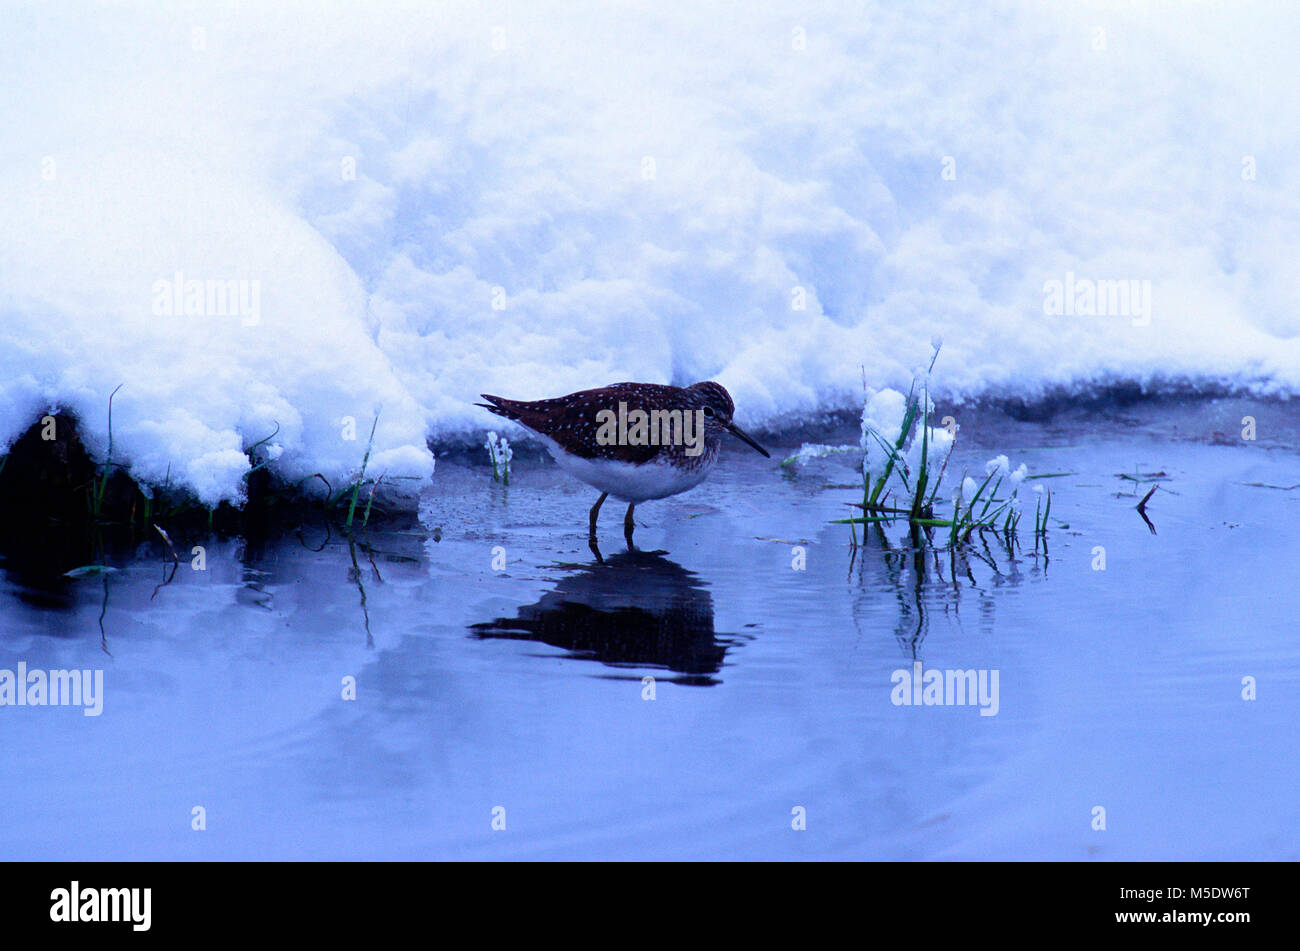 Solitary Sandpiper, Tringa solitaris, Scolopacidae, Sandpiper, shorebird, bird, animal, pond, snow, Banff National Park, Alberta, Canada Stock Photo